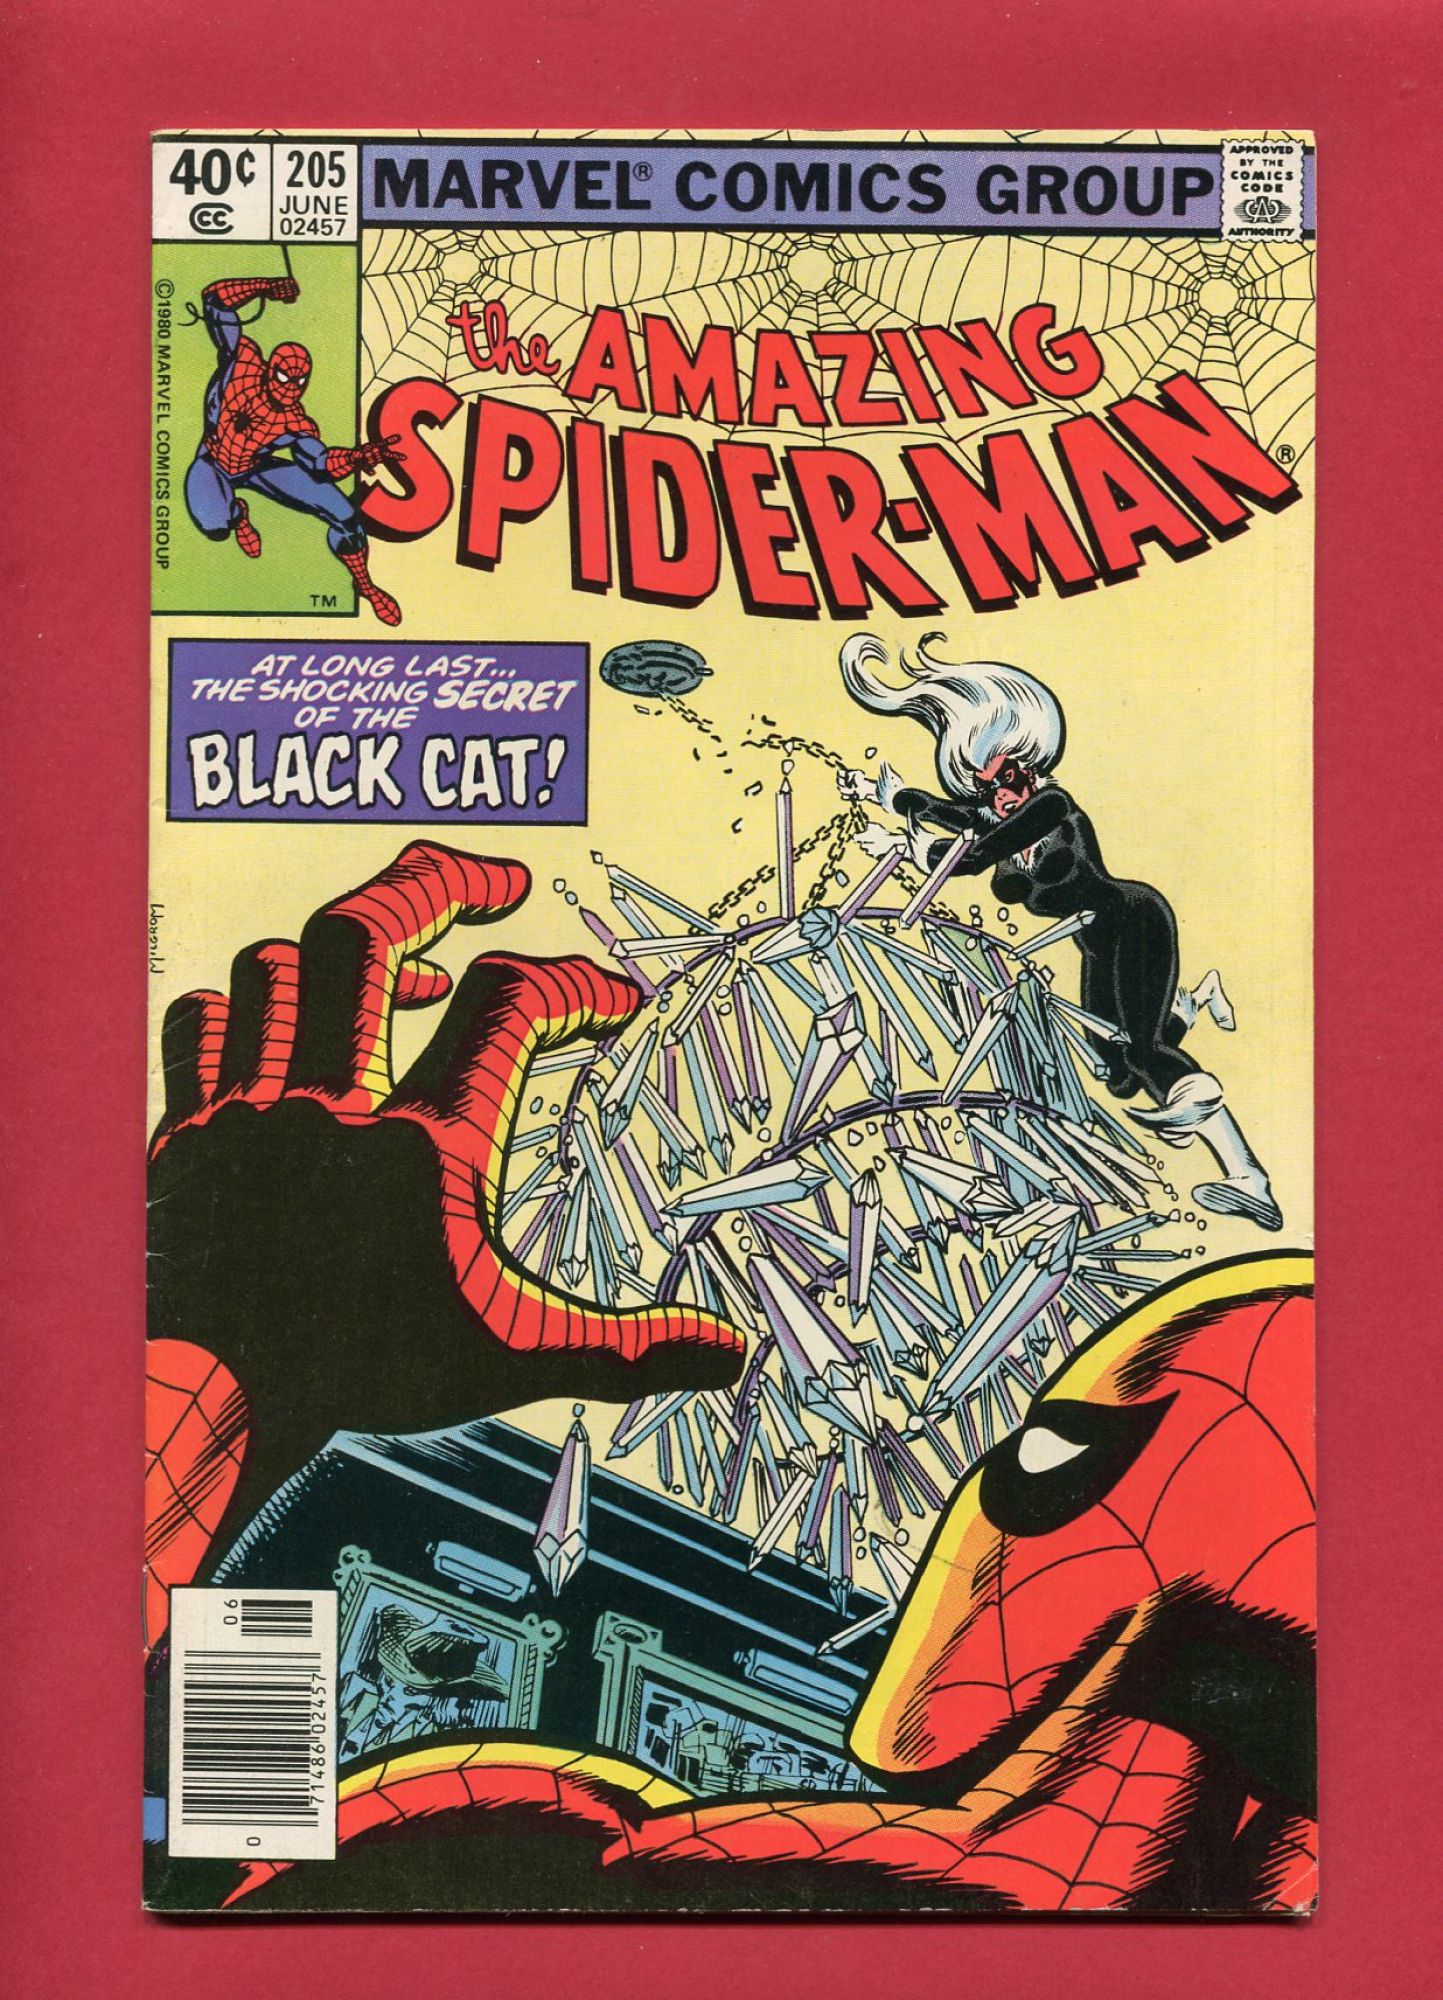 Amazing Spider-Man #205, Jun 1980, 7.0 FN/VF